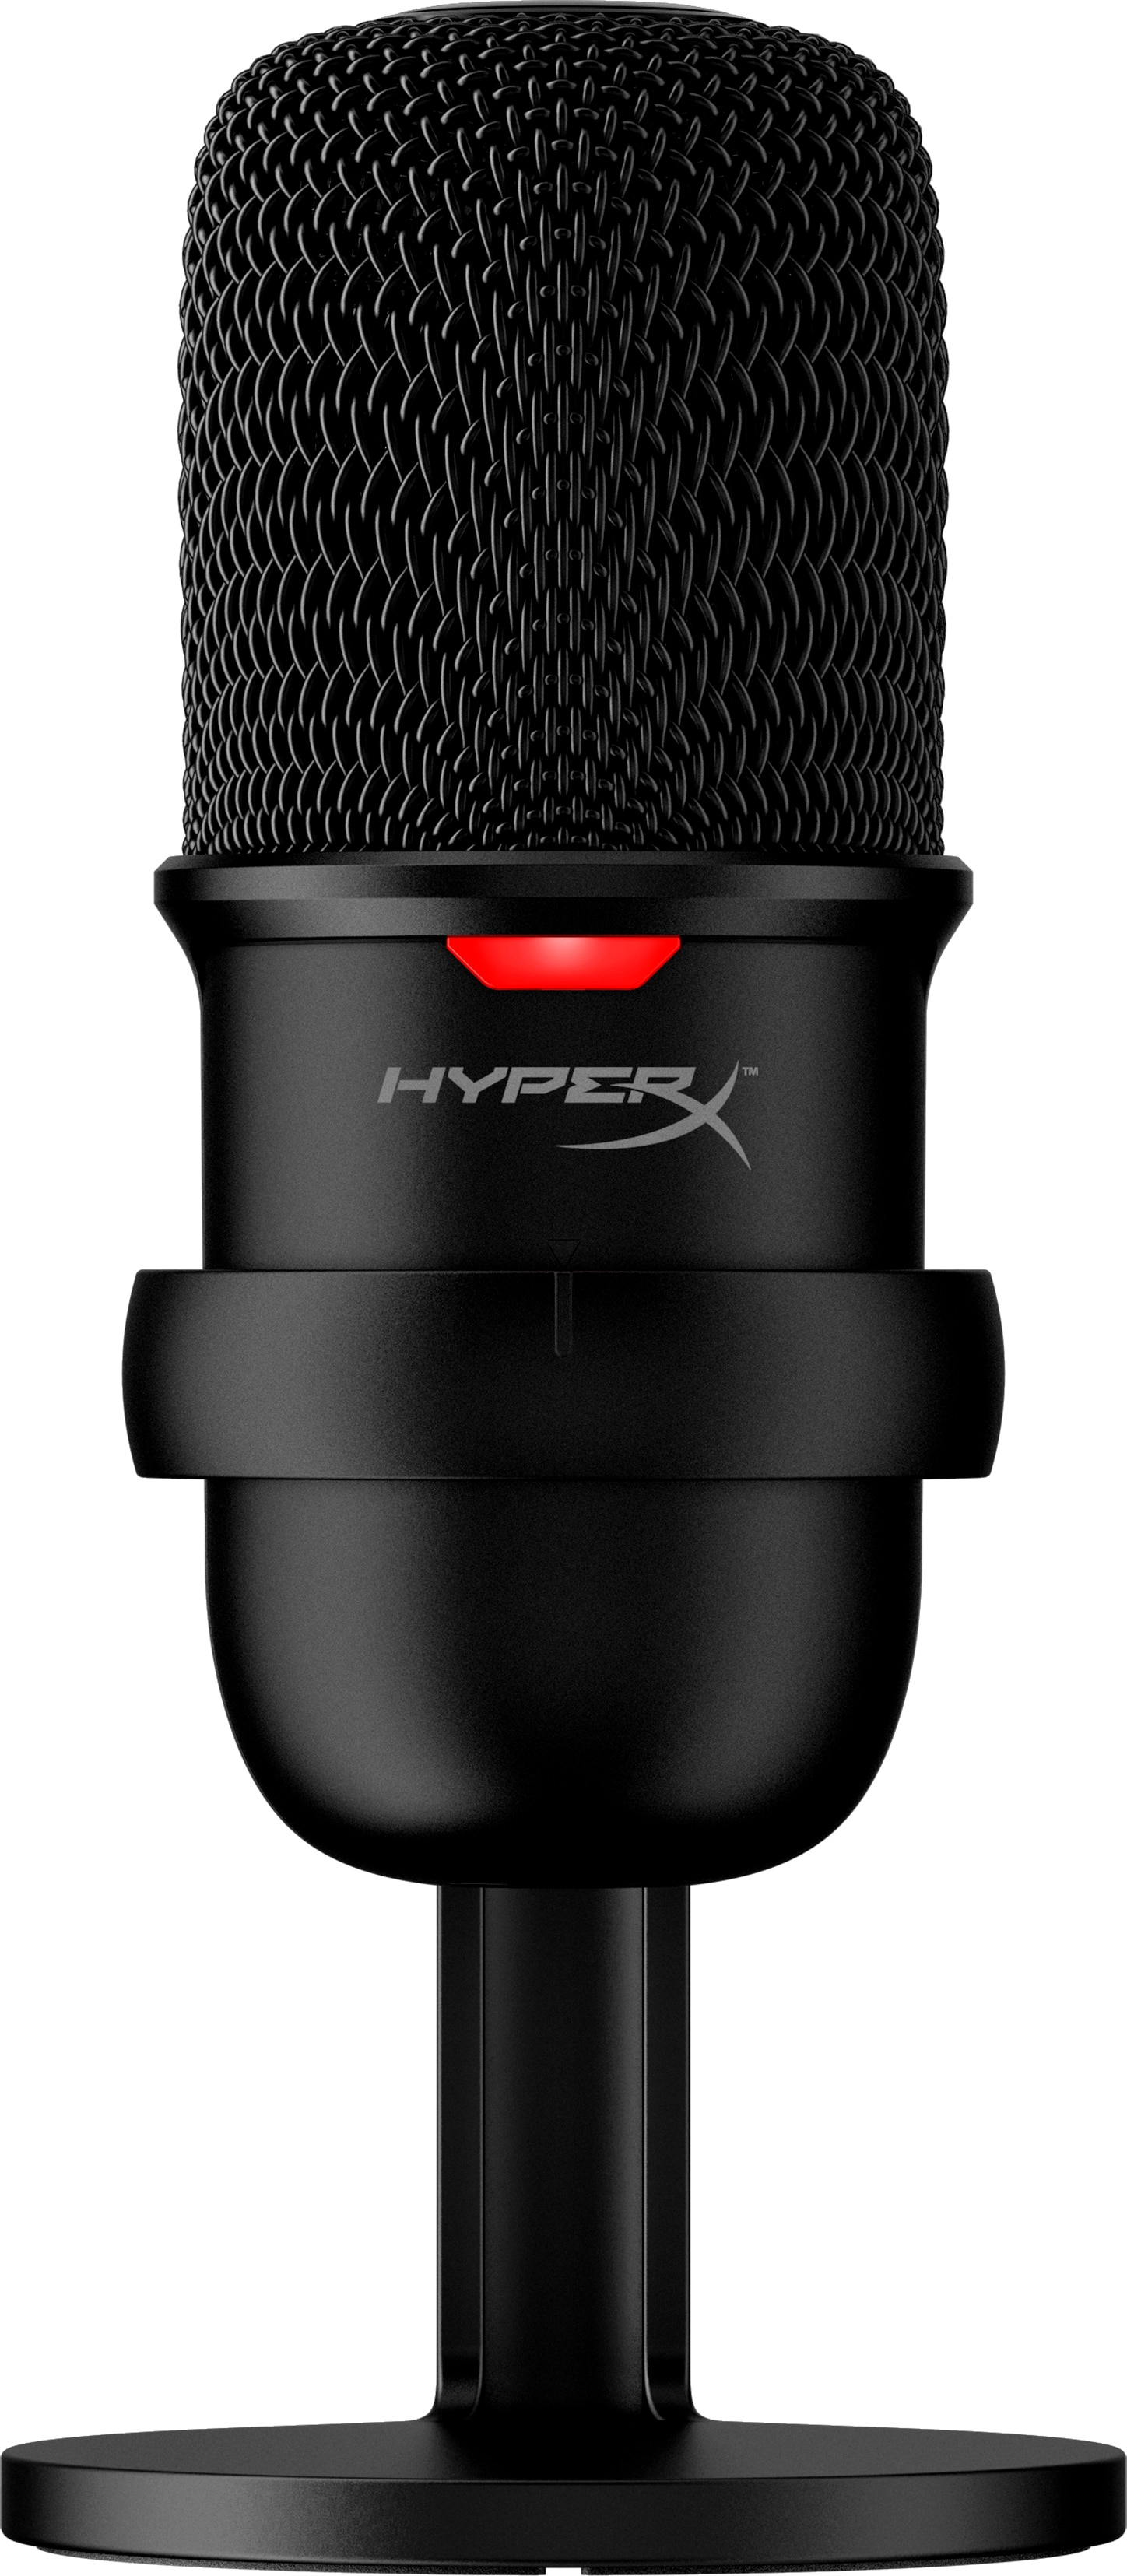 HP HyperX SoloCast - USB Microphone (Black)